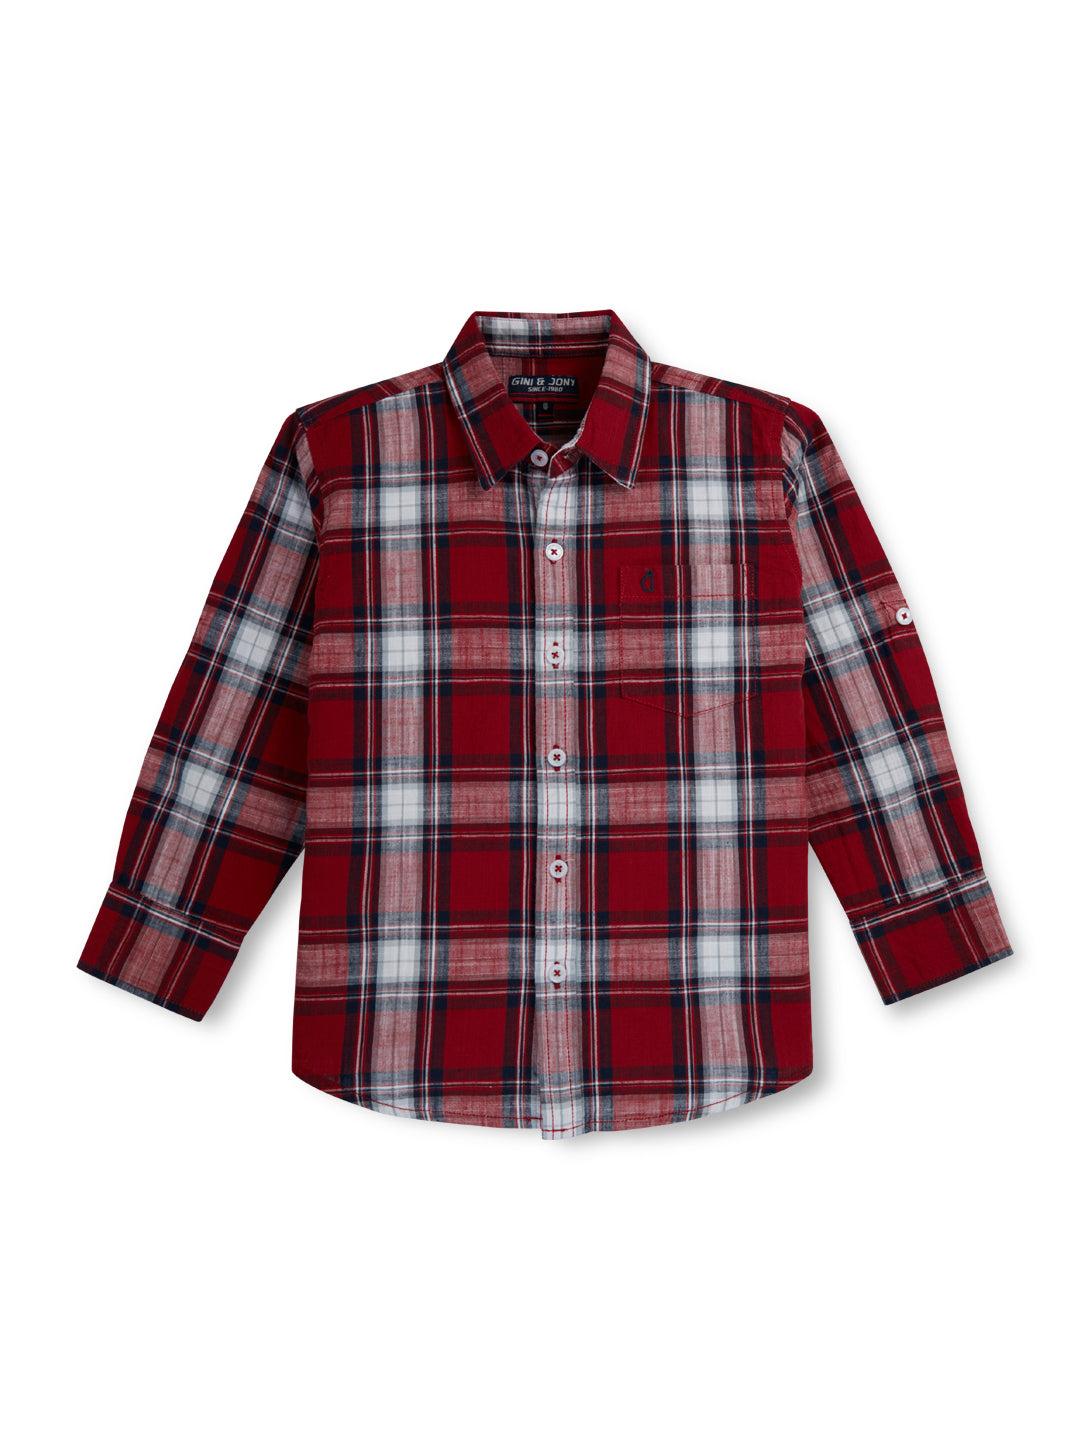 Boys Red Checks Cotton Full Sleeves Shirt